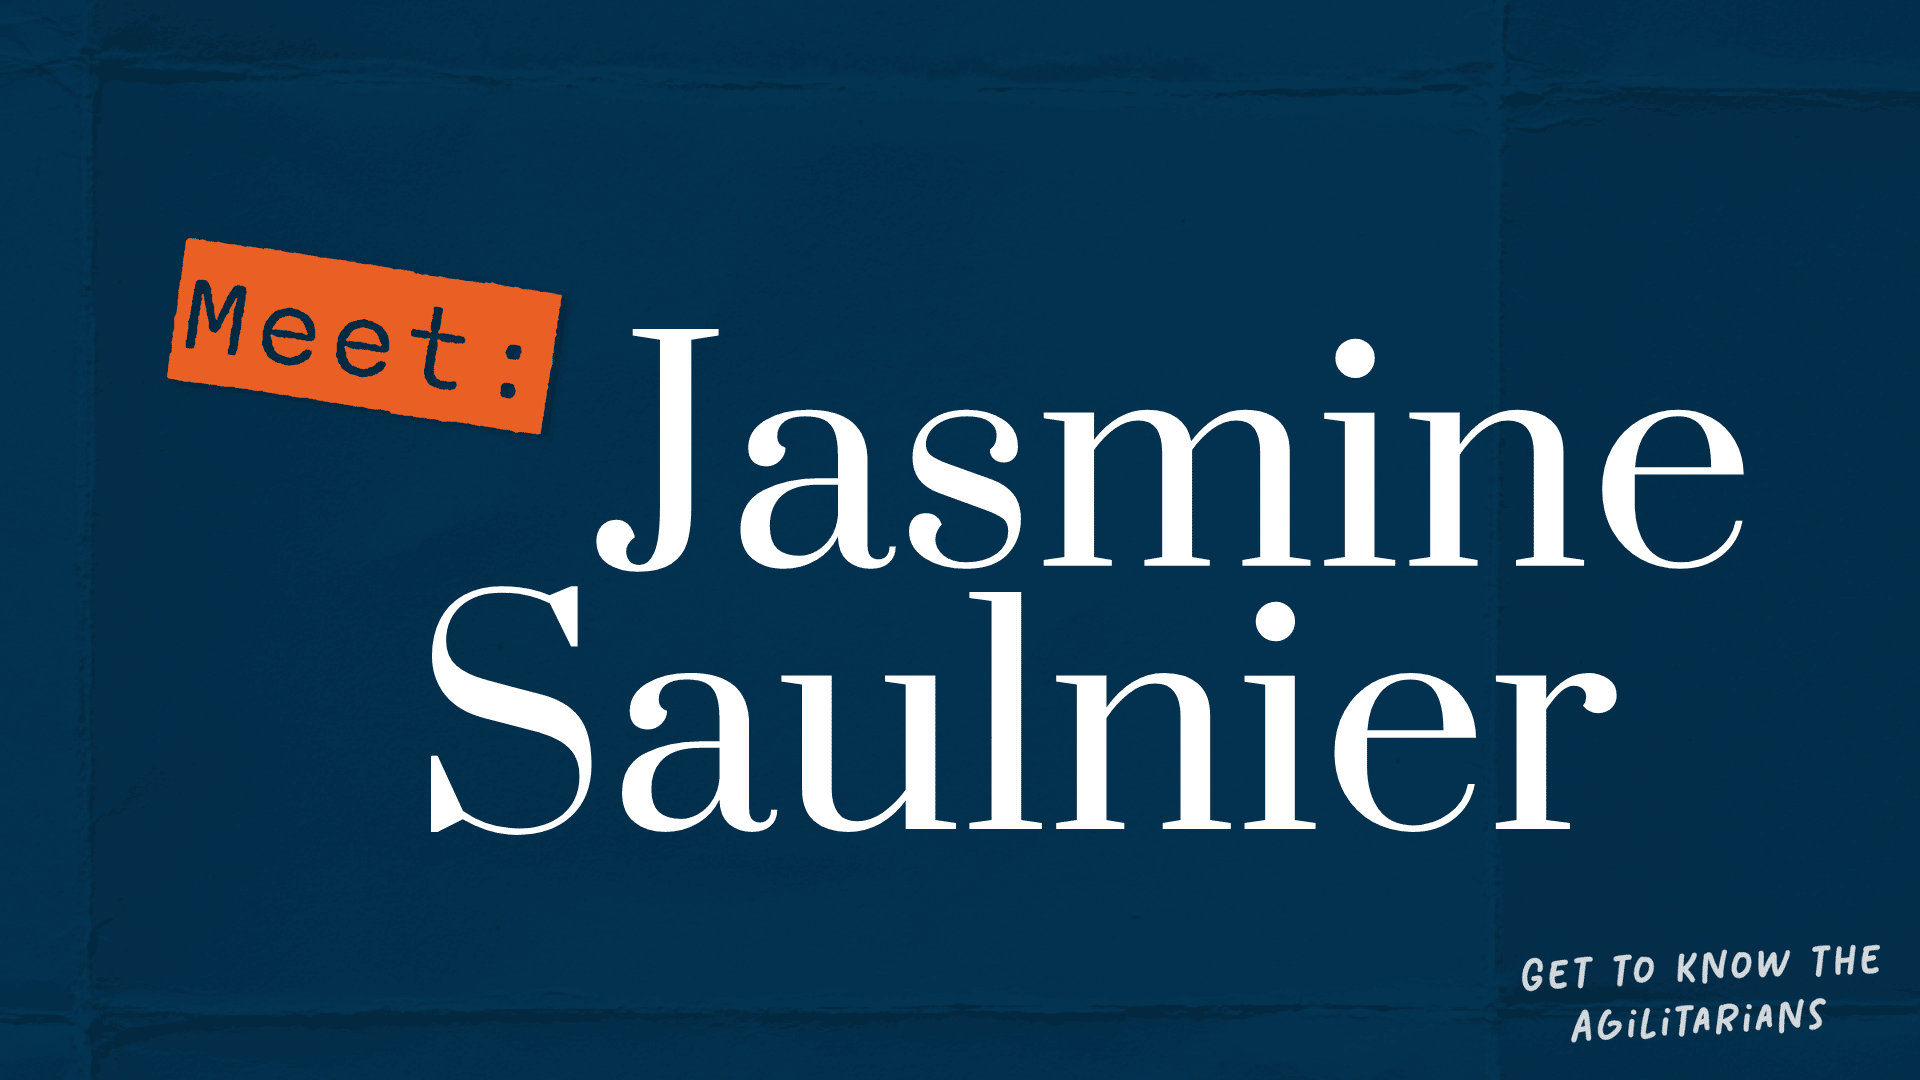 Get to know the Agilitarians: Meet Jasmine Saulnier